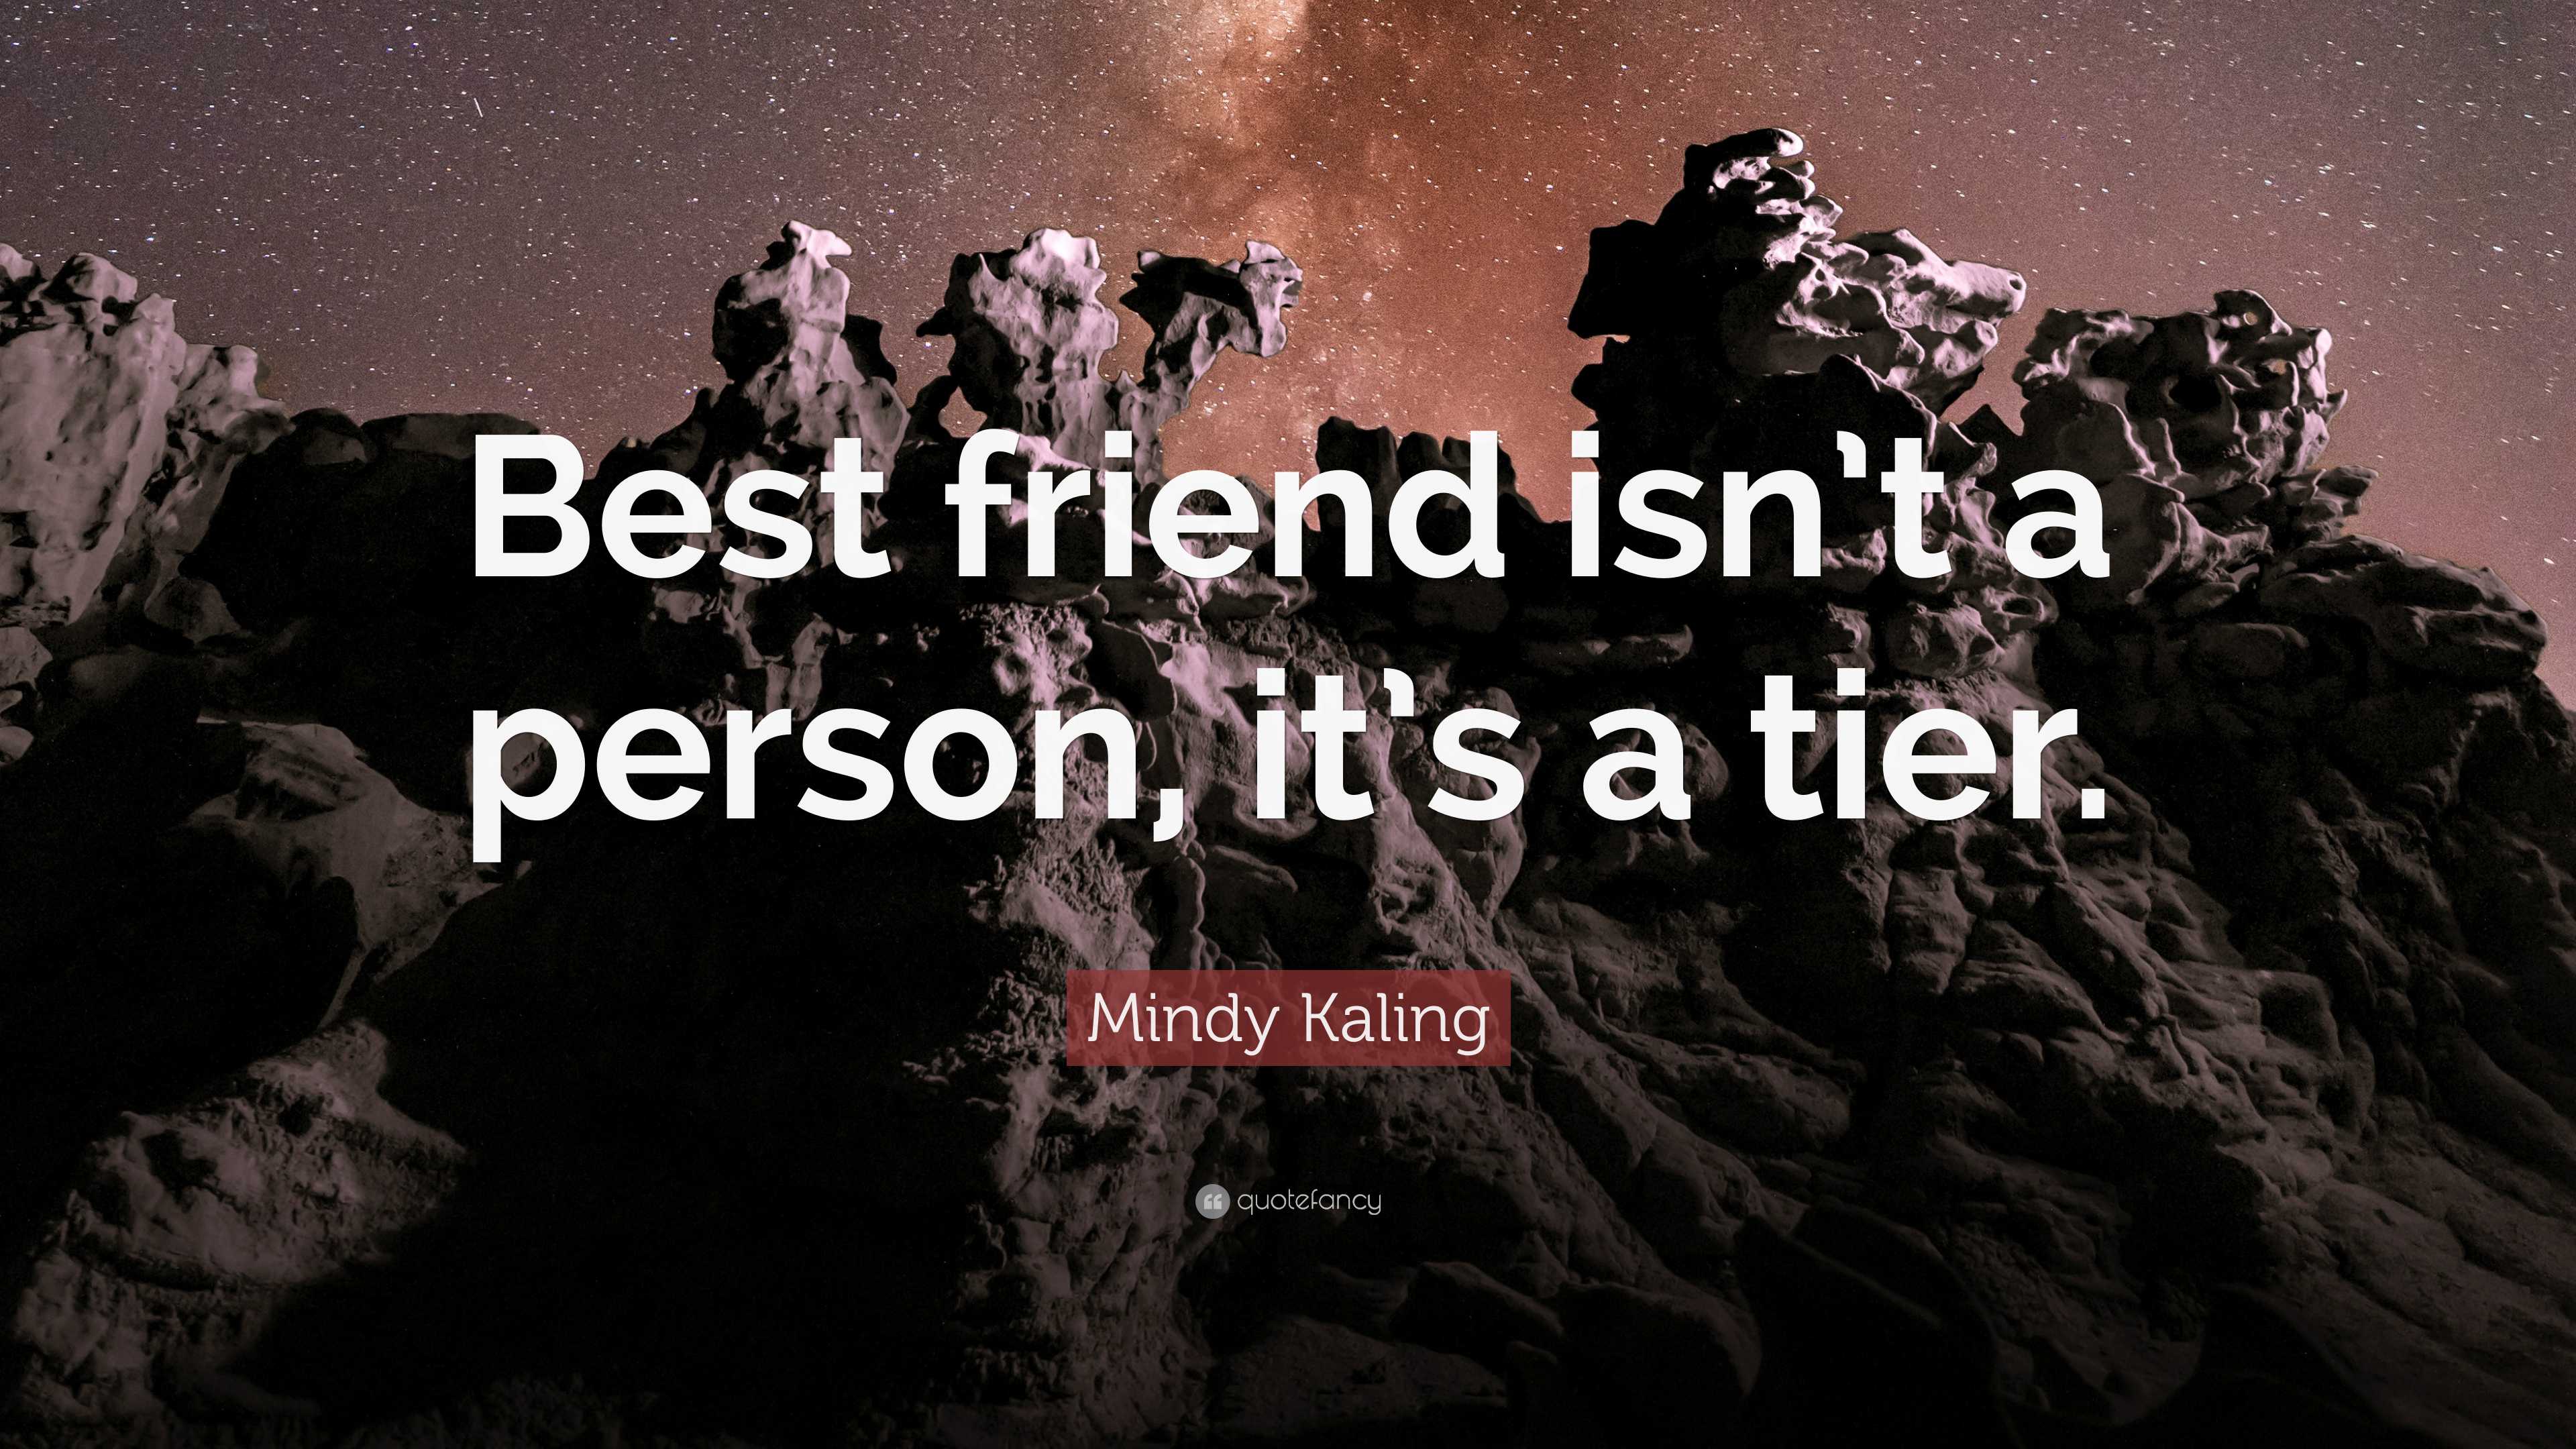 https://quotefancy.com/media/wallpaper/3840x2160/7995713-Mindy-Kaling-Quote-Best-friend-isn-t-a-person-it-s-a-tier.jpg